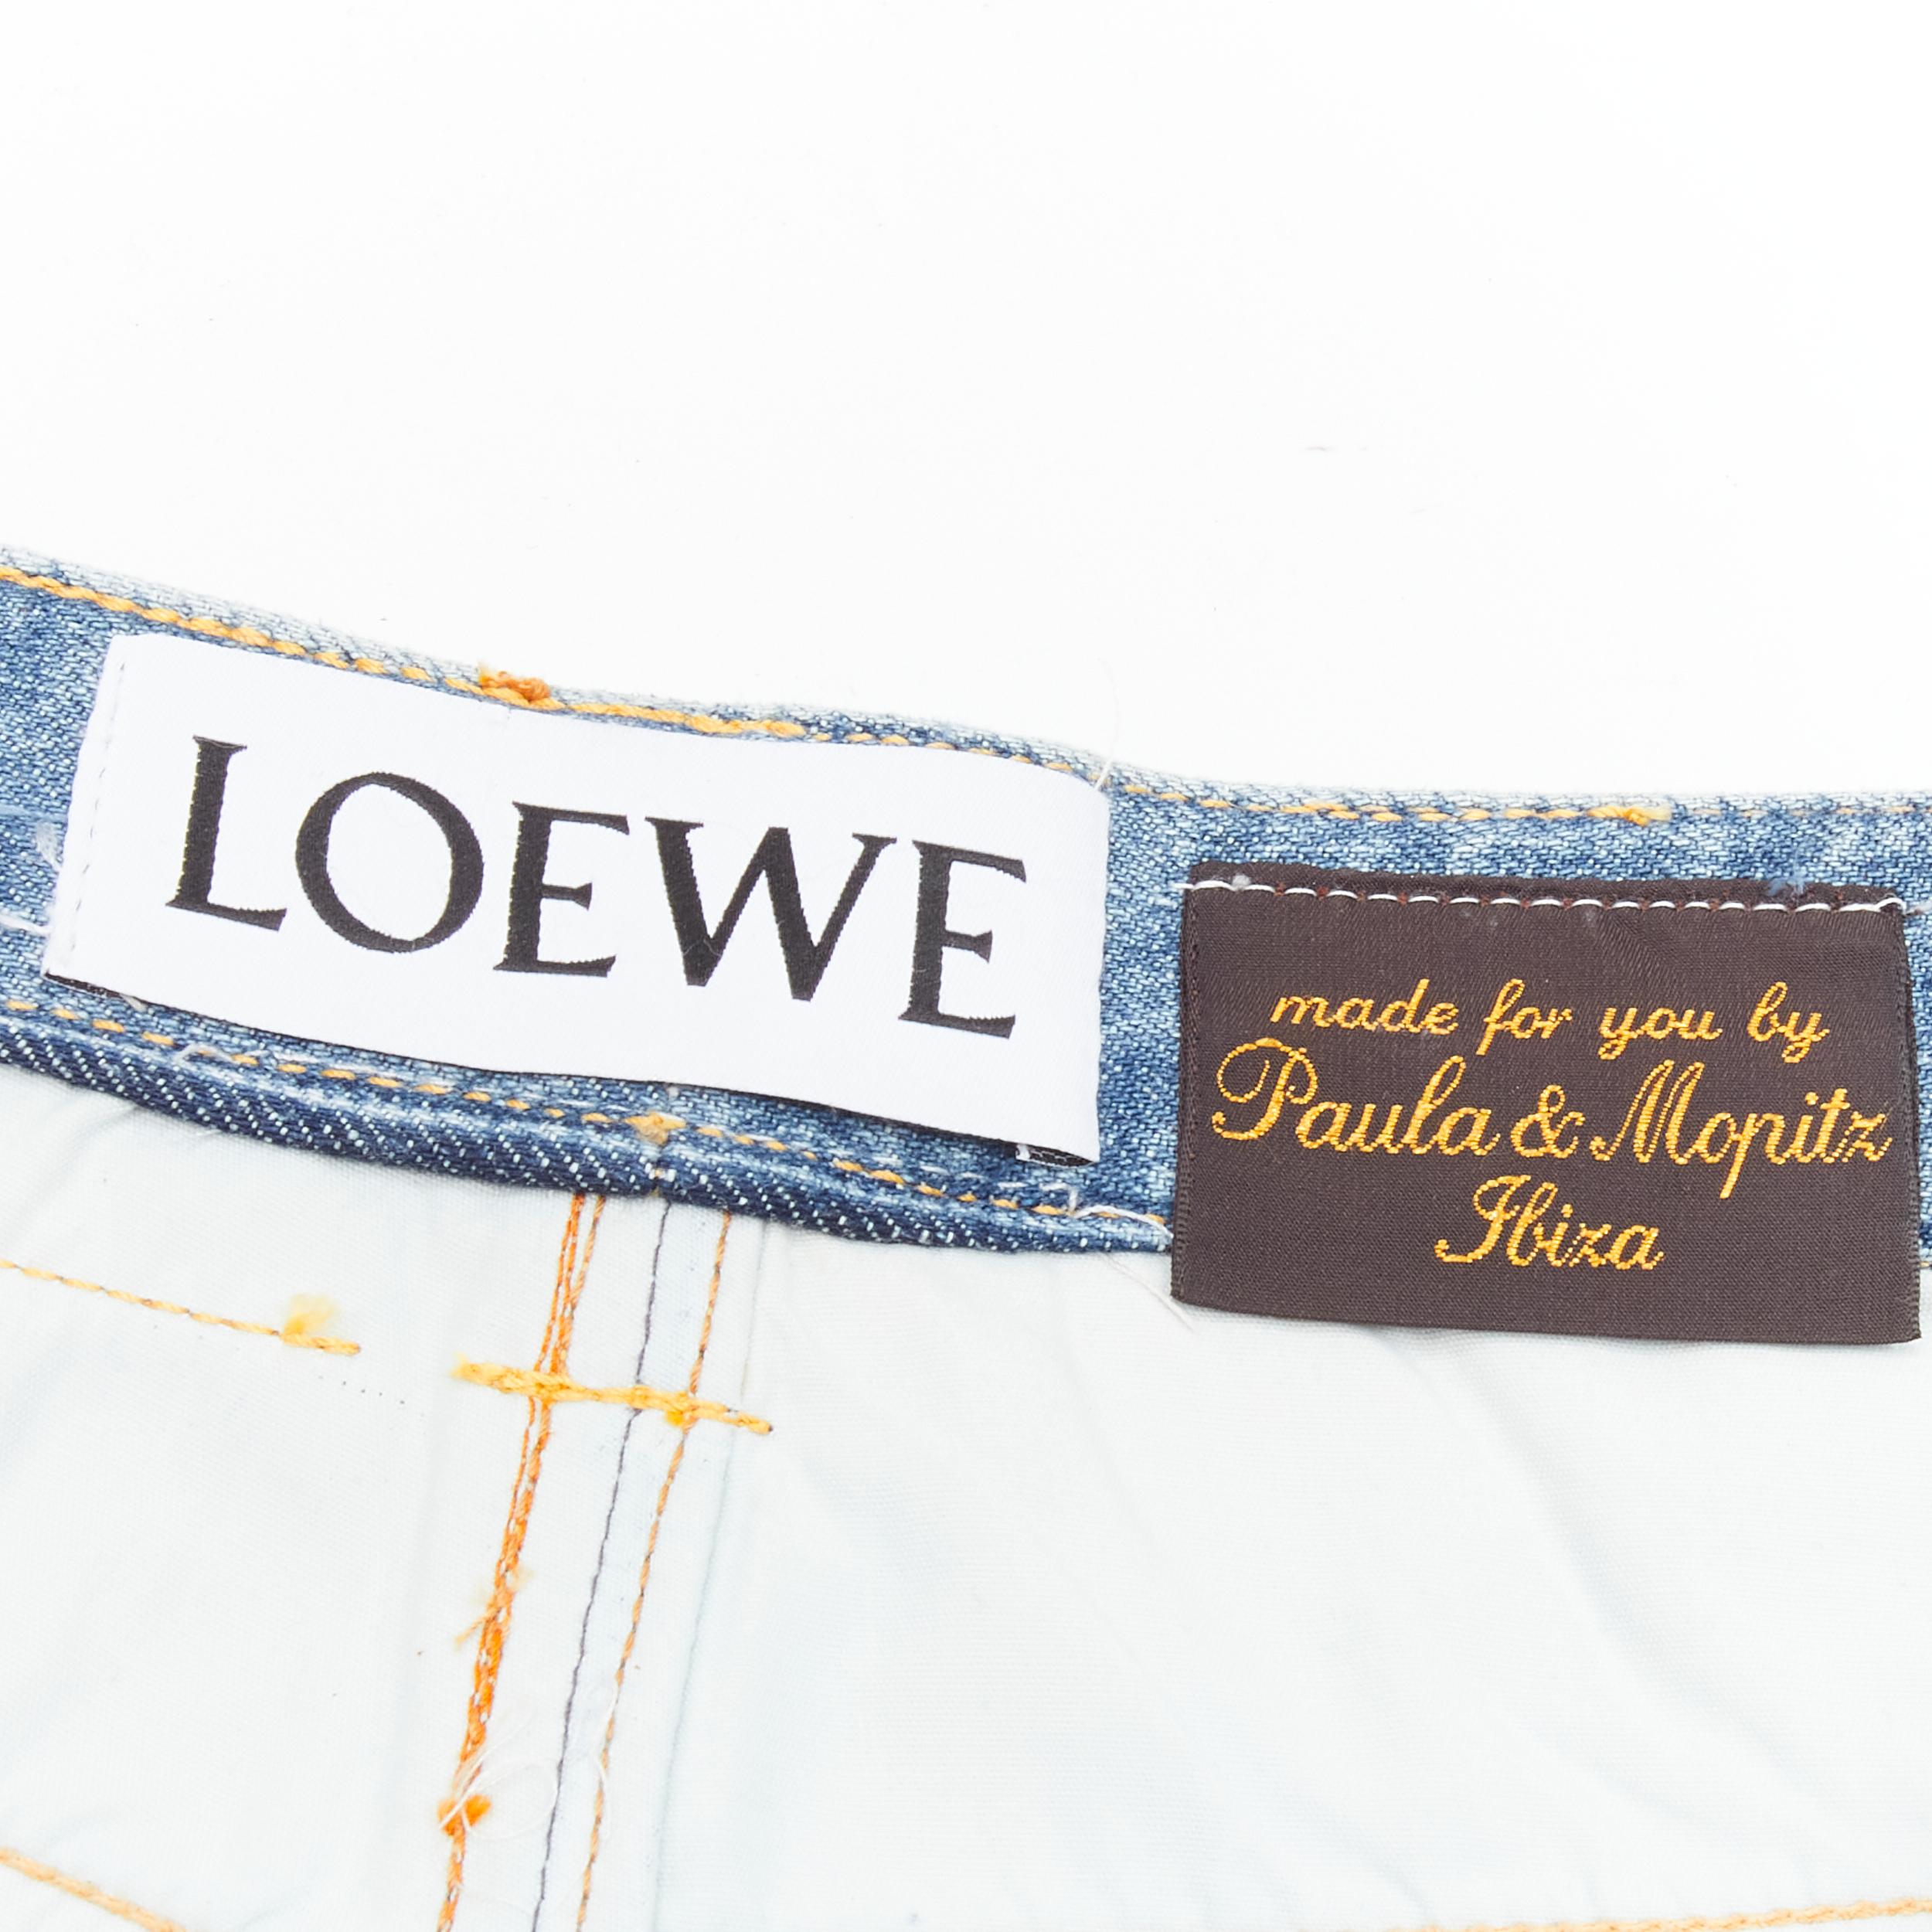 LOEWE PAULA'S IBIZA blue denim mixed sequins patchwork cut off shorts S For Sale 2